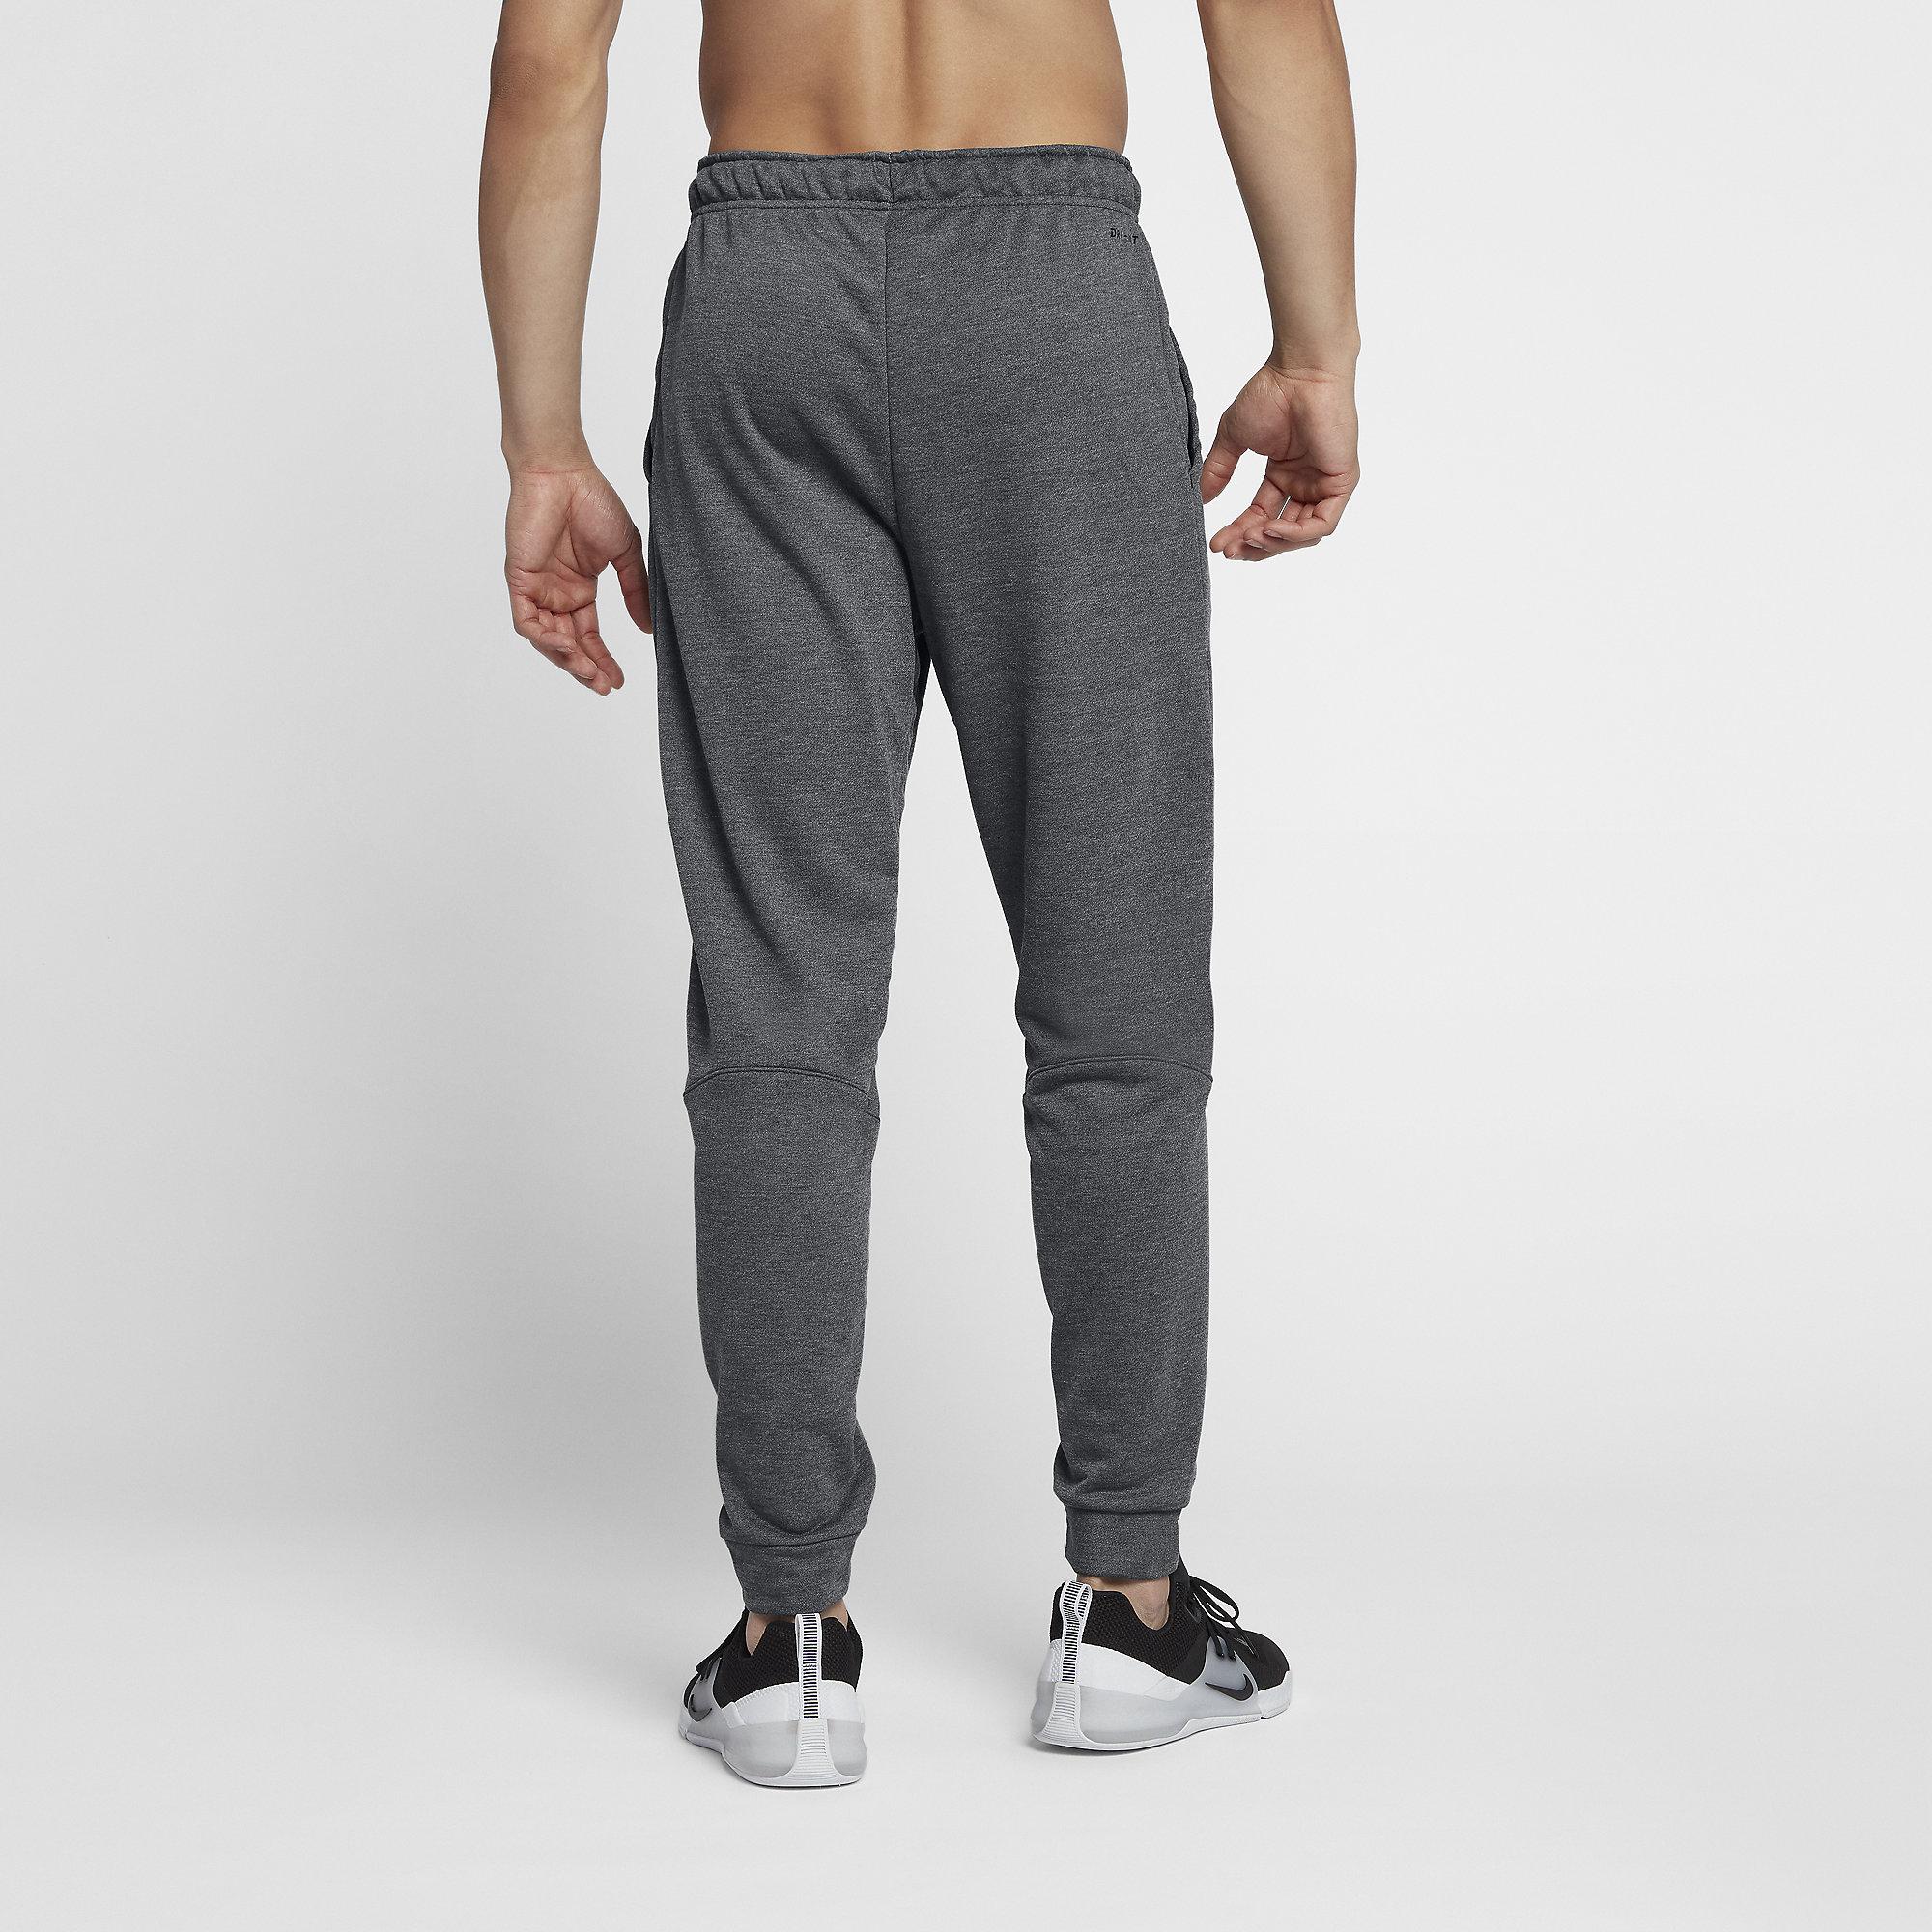 Nike Mens Training Pants - Charcoal Heather/Black - Tennisnuts.com